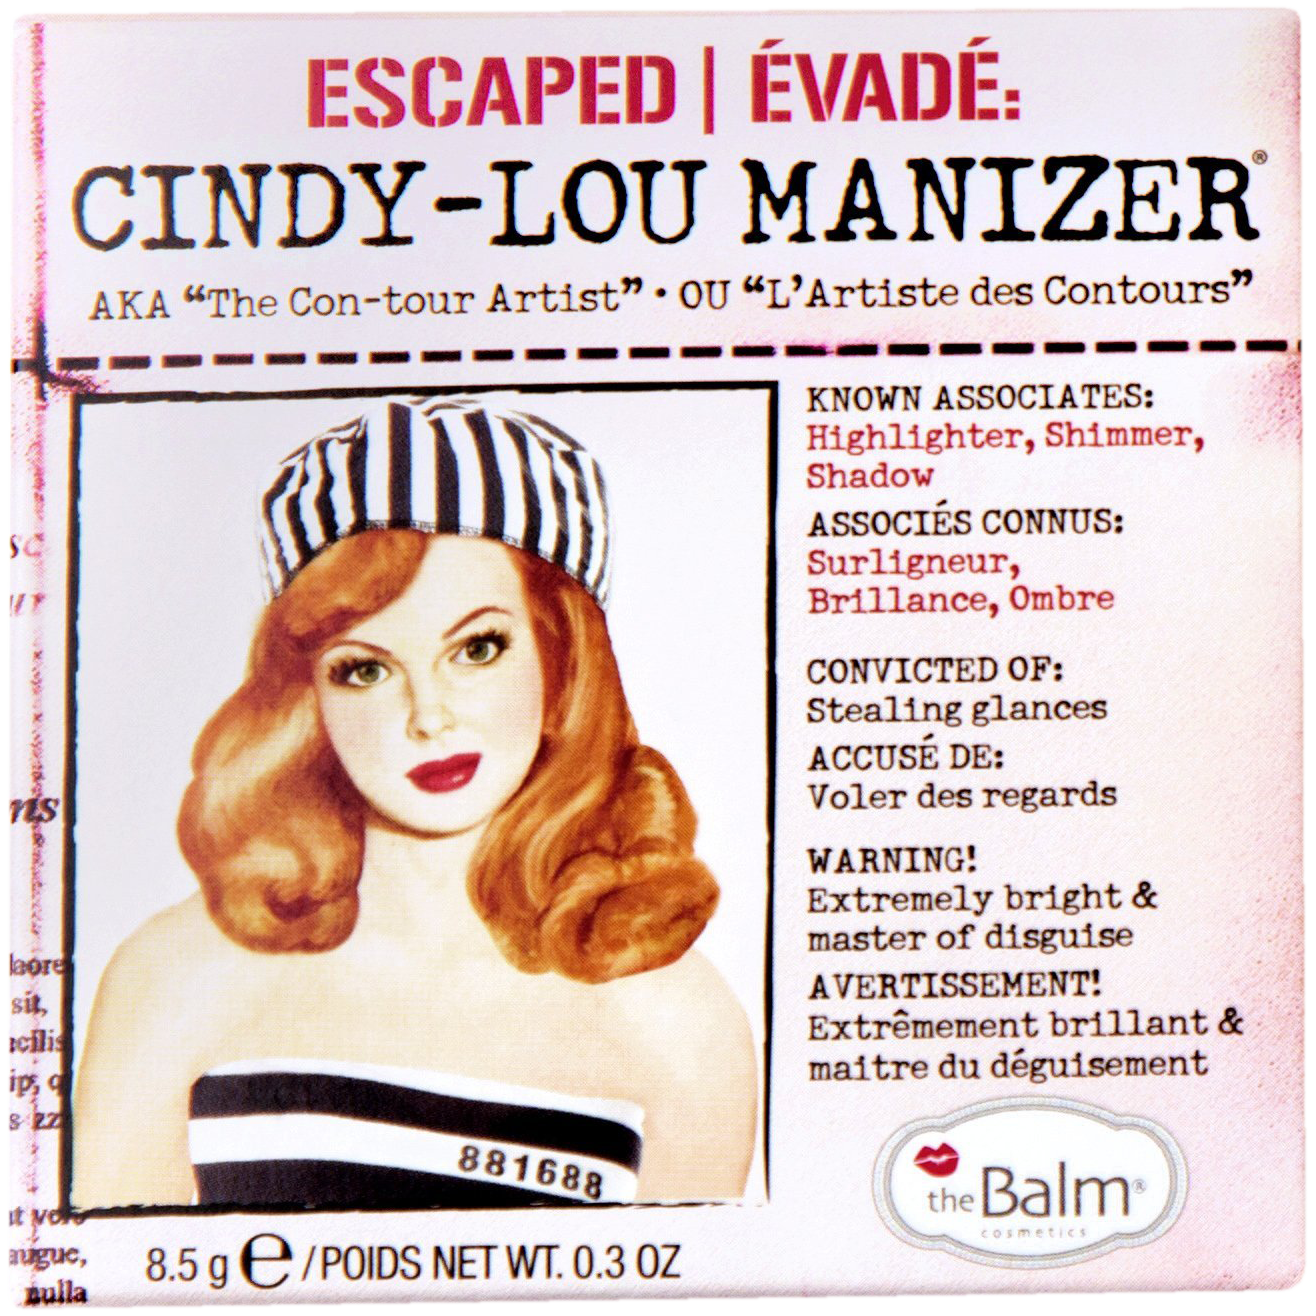 Хайлайтер для лица The Balm Cindy-Lou Manizer, 8,5 гр хайлайтеры thebalm хайлайтер cindy lou manizer